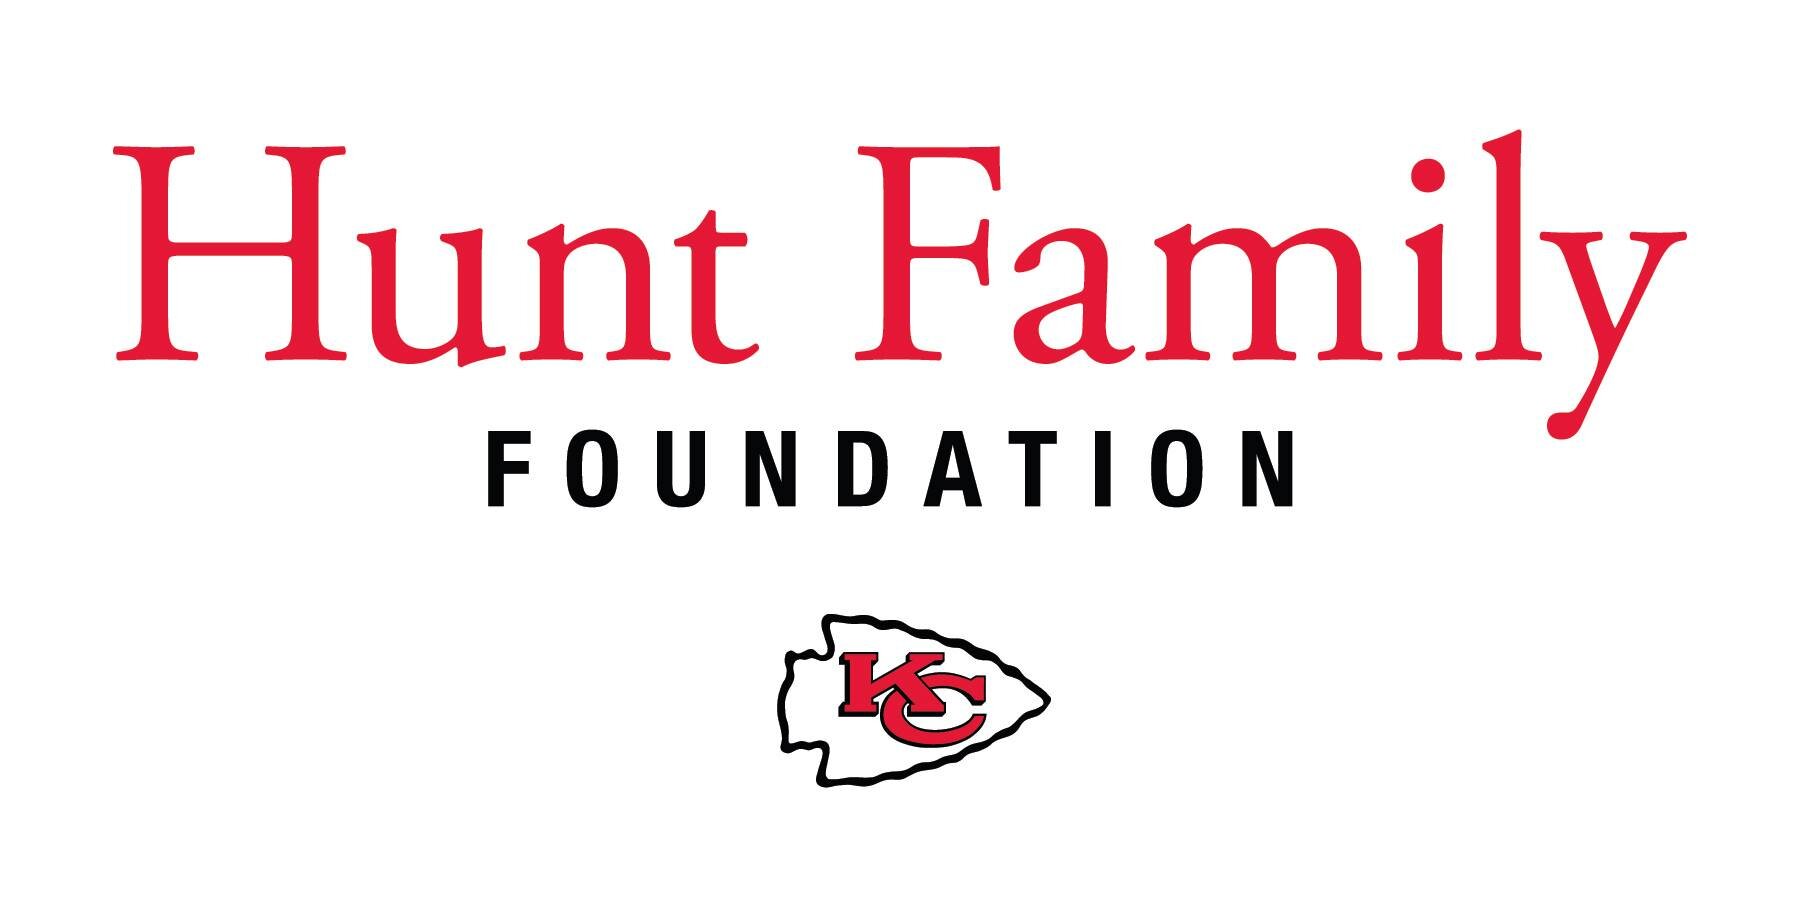 Hunt Family Foundation logo.jpg